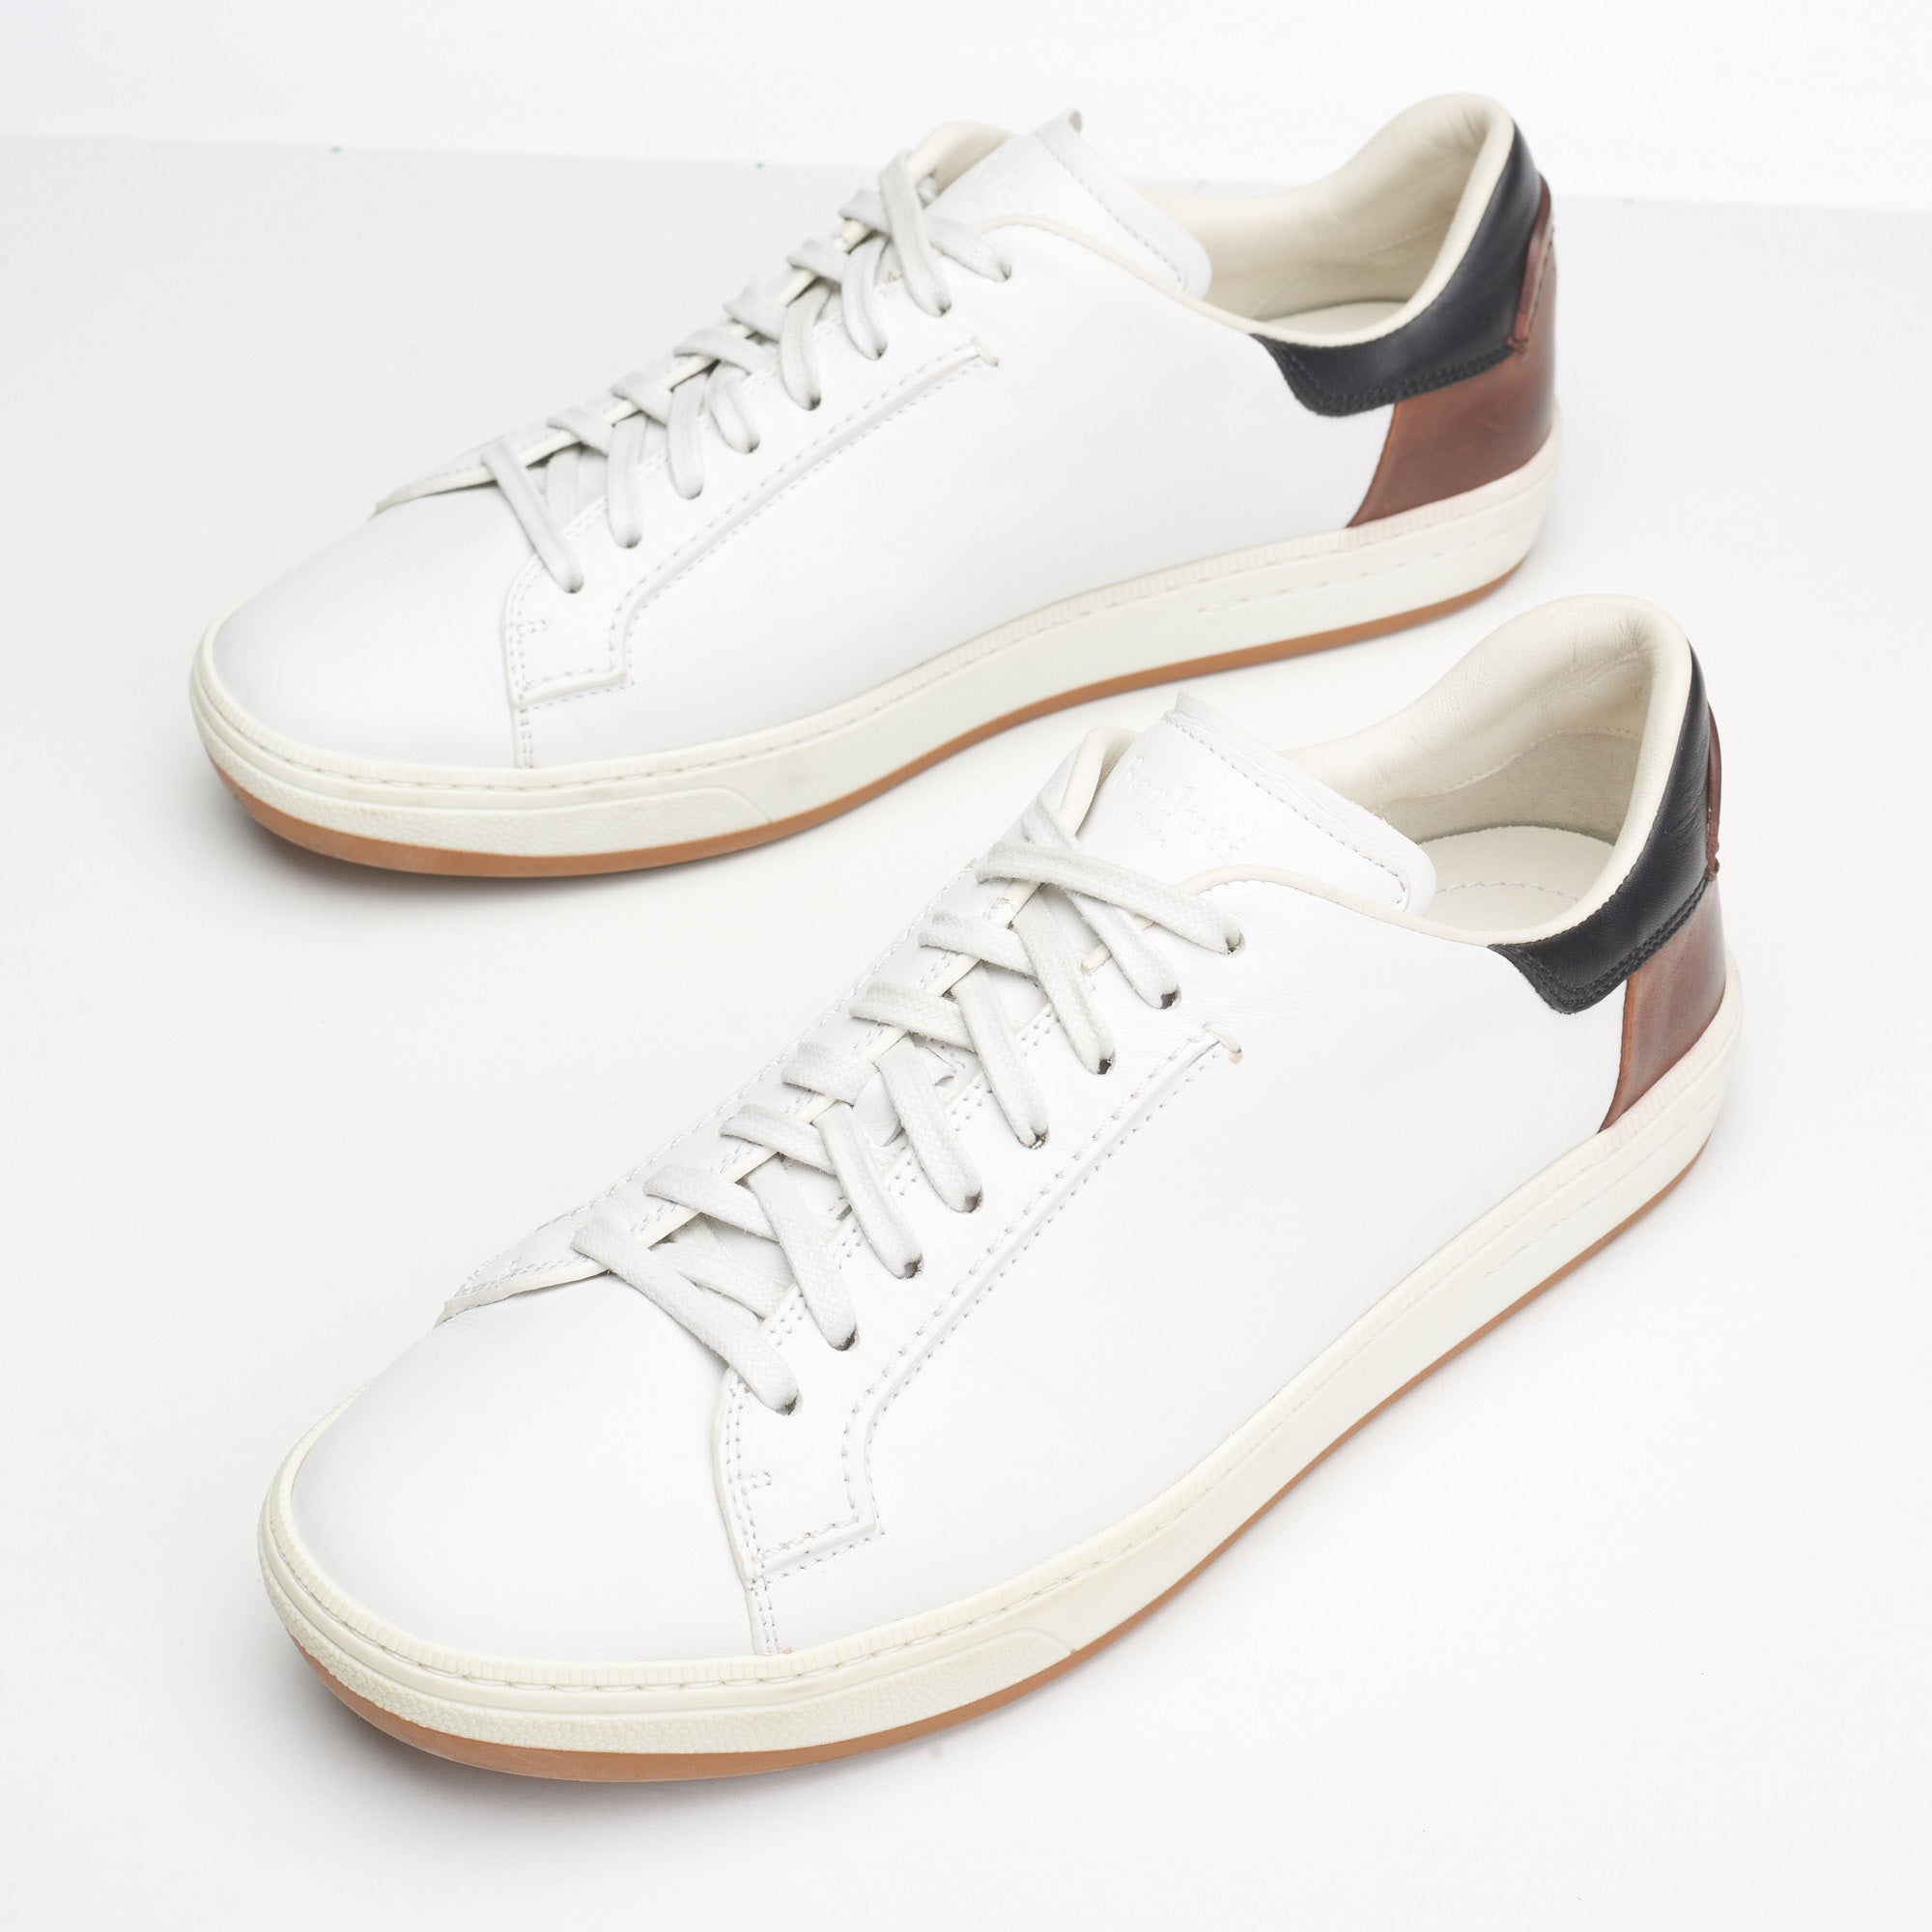 Fast Track Leather Sneaker - Color: Brown - Size: 6.5 - Men - Berluti